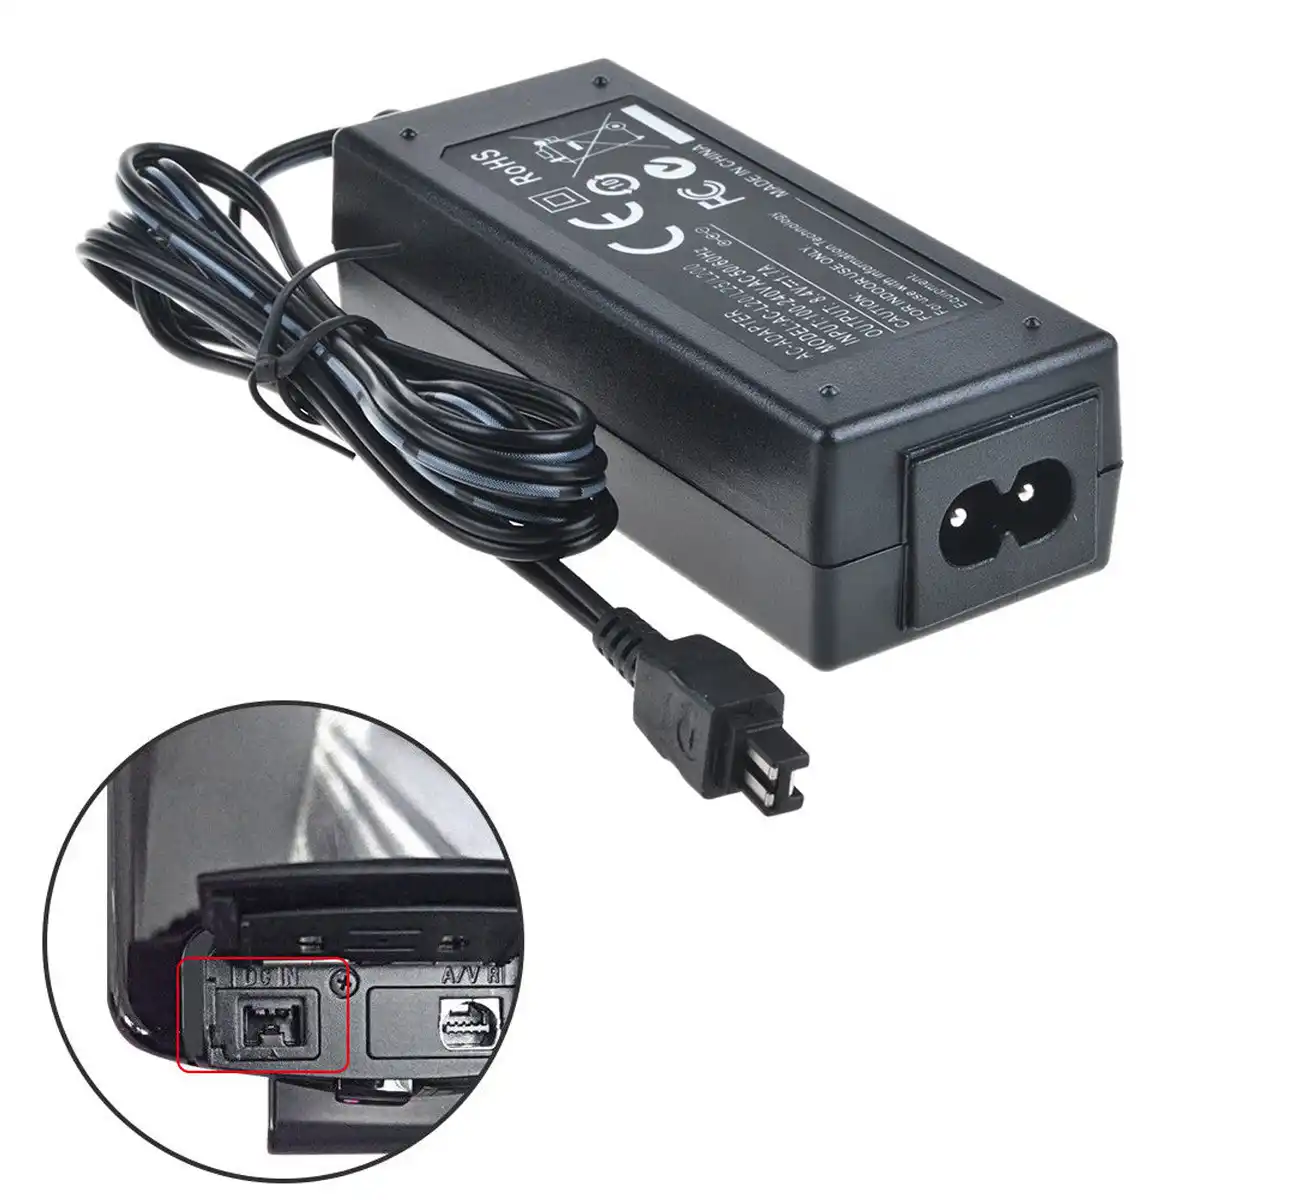 DCR-HC23 Handycam Camcorder USB Power Adapter Charger for Sony DCR-HC20 DCR-HC21 DCR-HC22